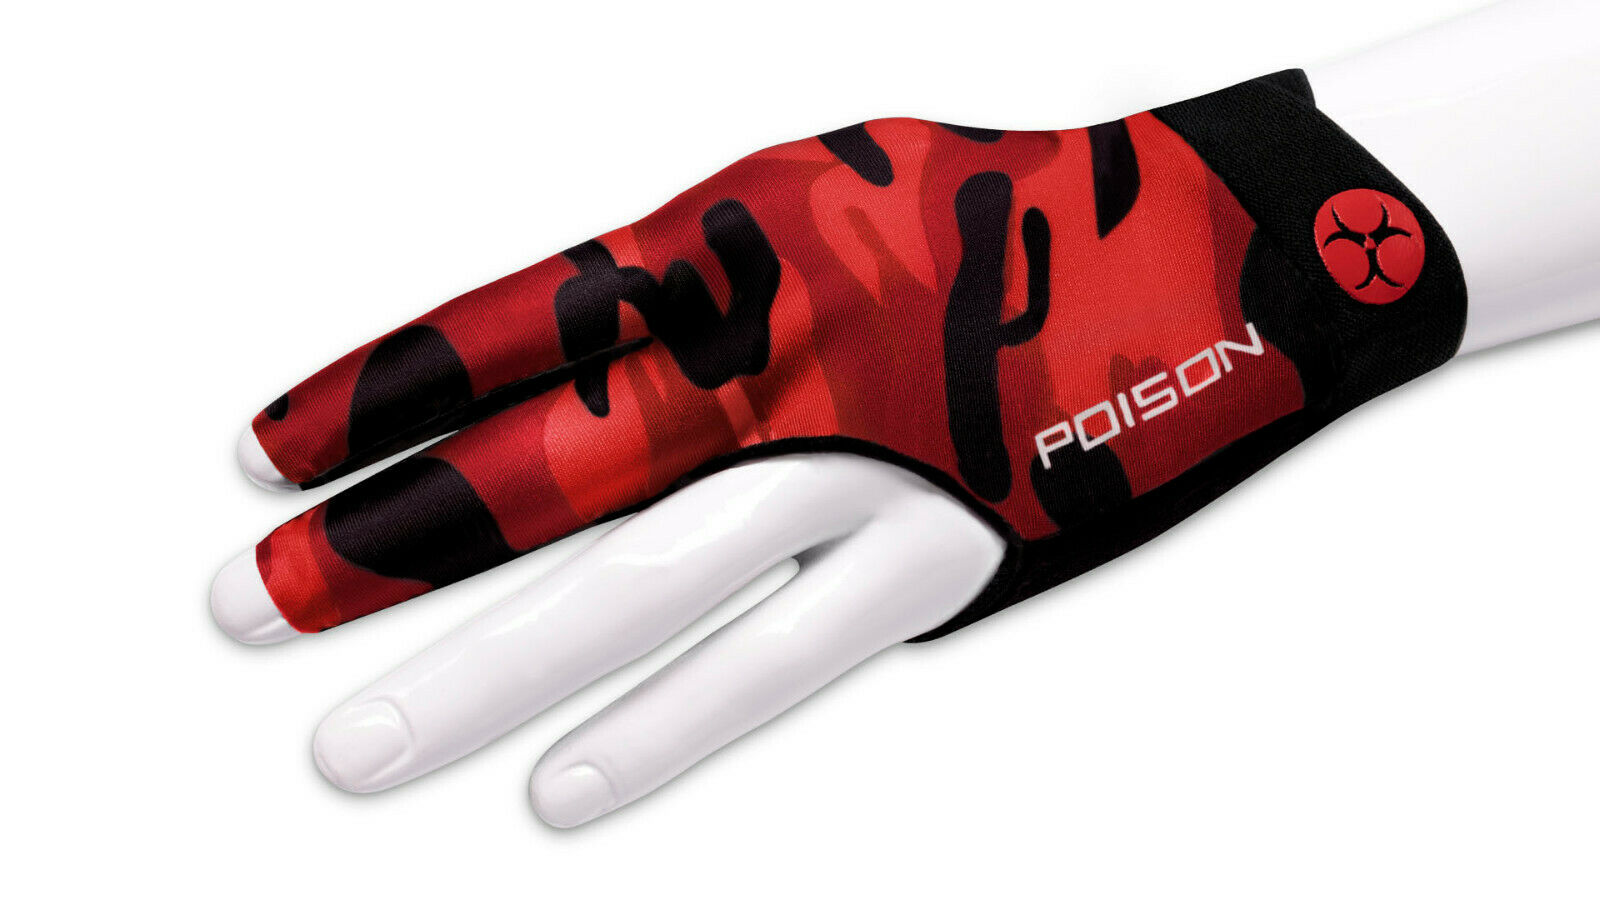 Перчатка Poison Camo Red L/XL